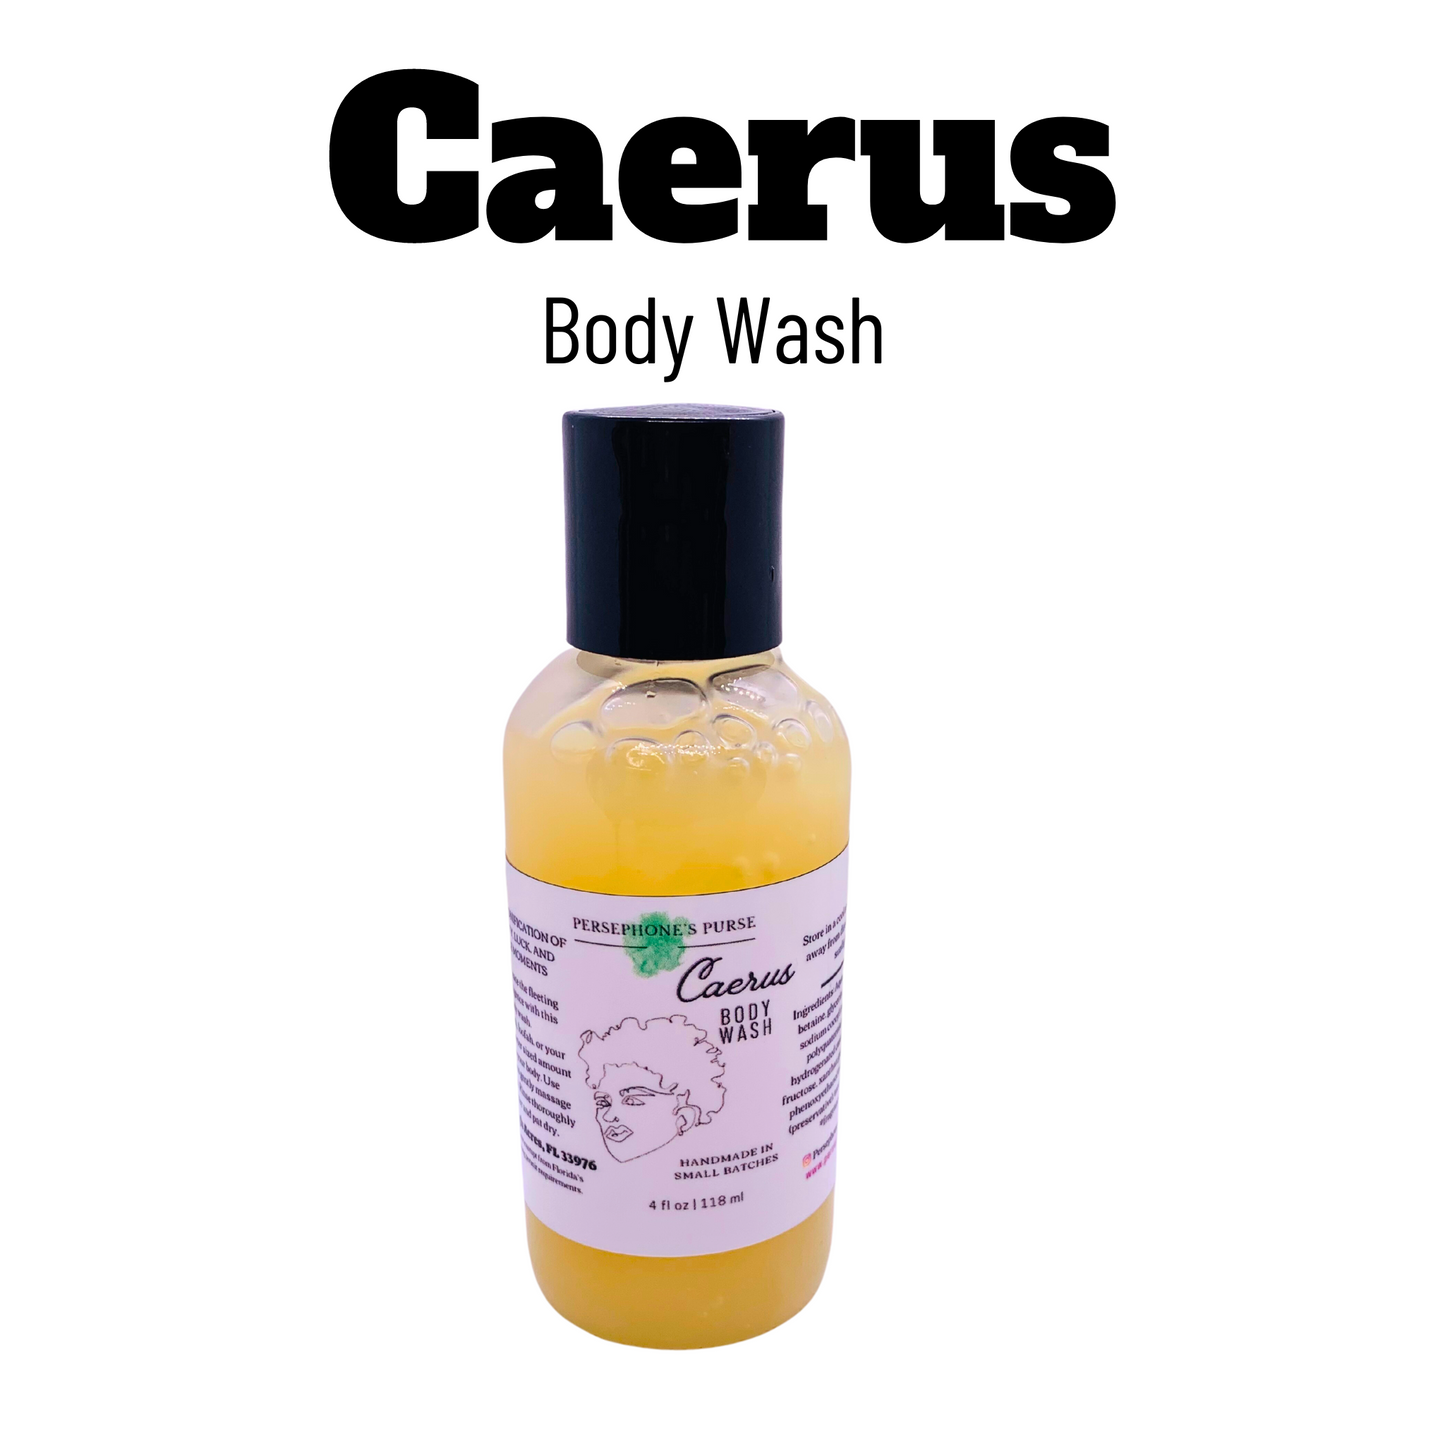 Caerus Creamy Body Wash 4 fl. oz. - Persephone's Purse